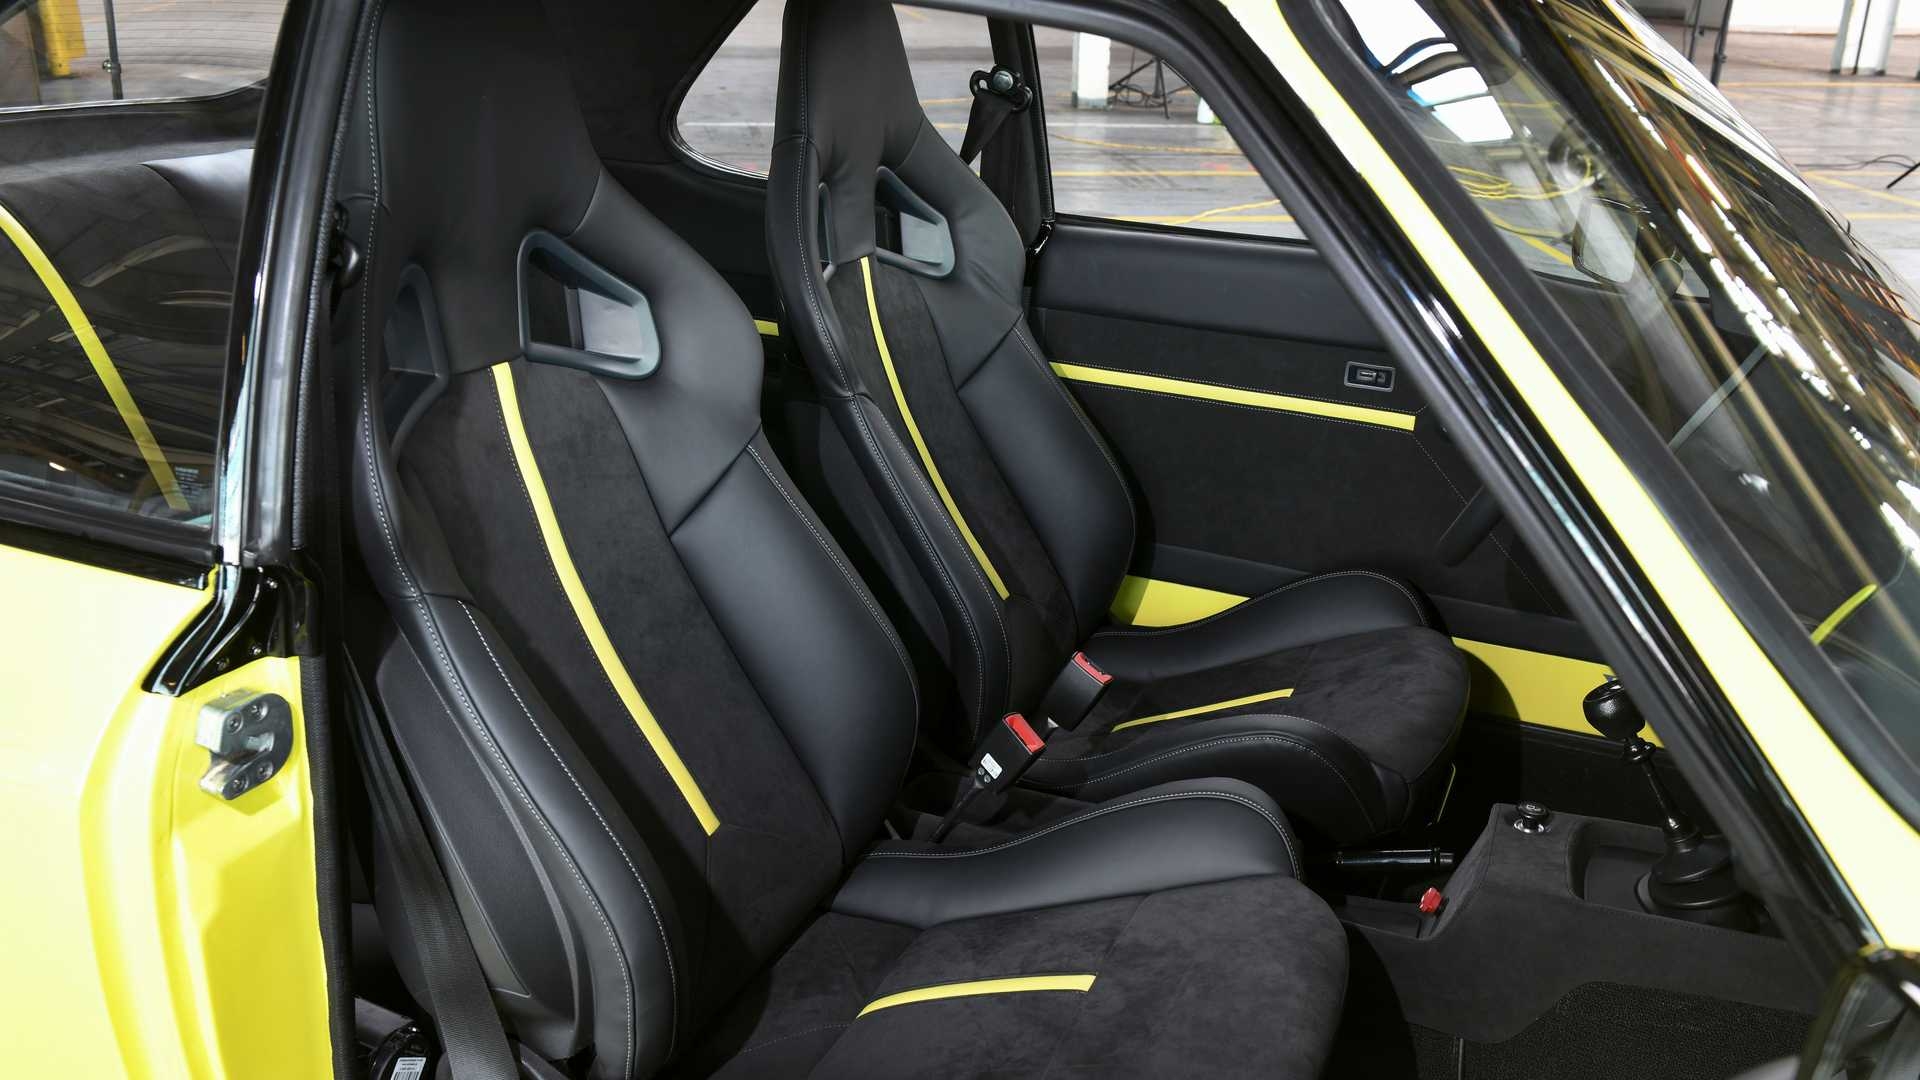 New 2021 Opel Manta GSe ElektroMOD concept